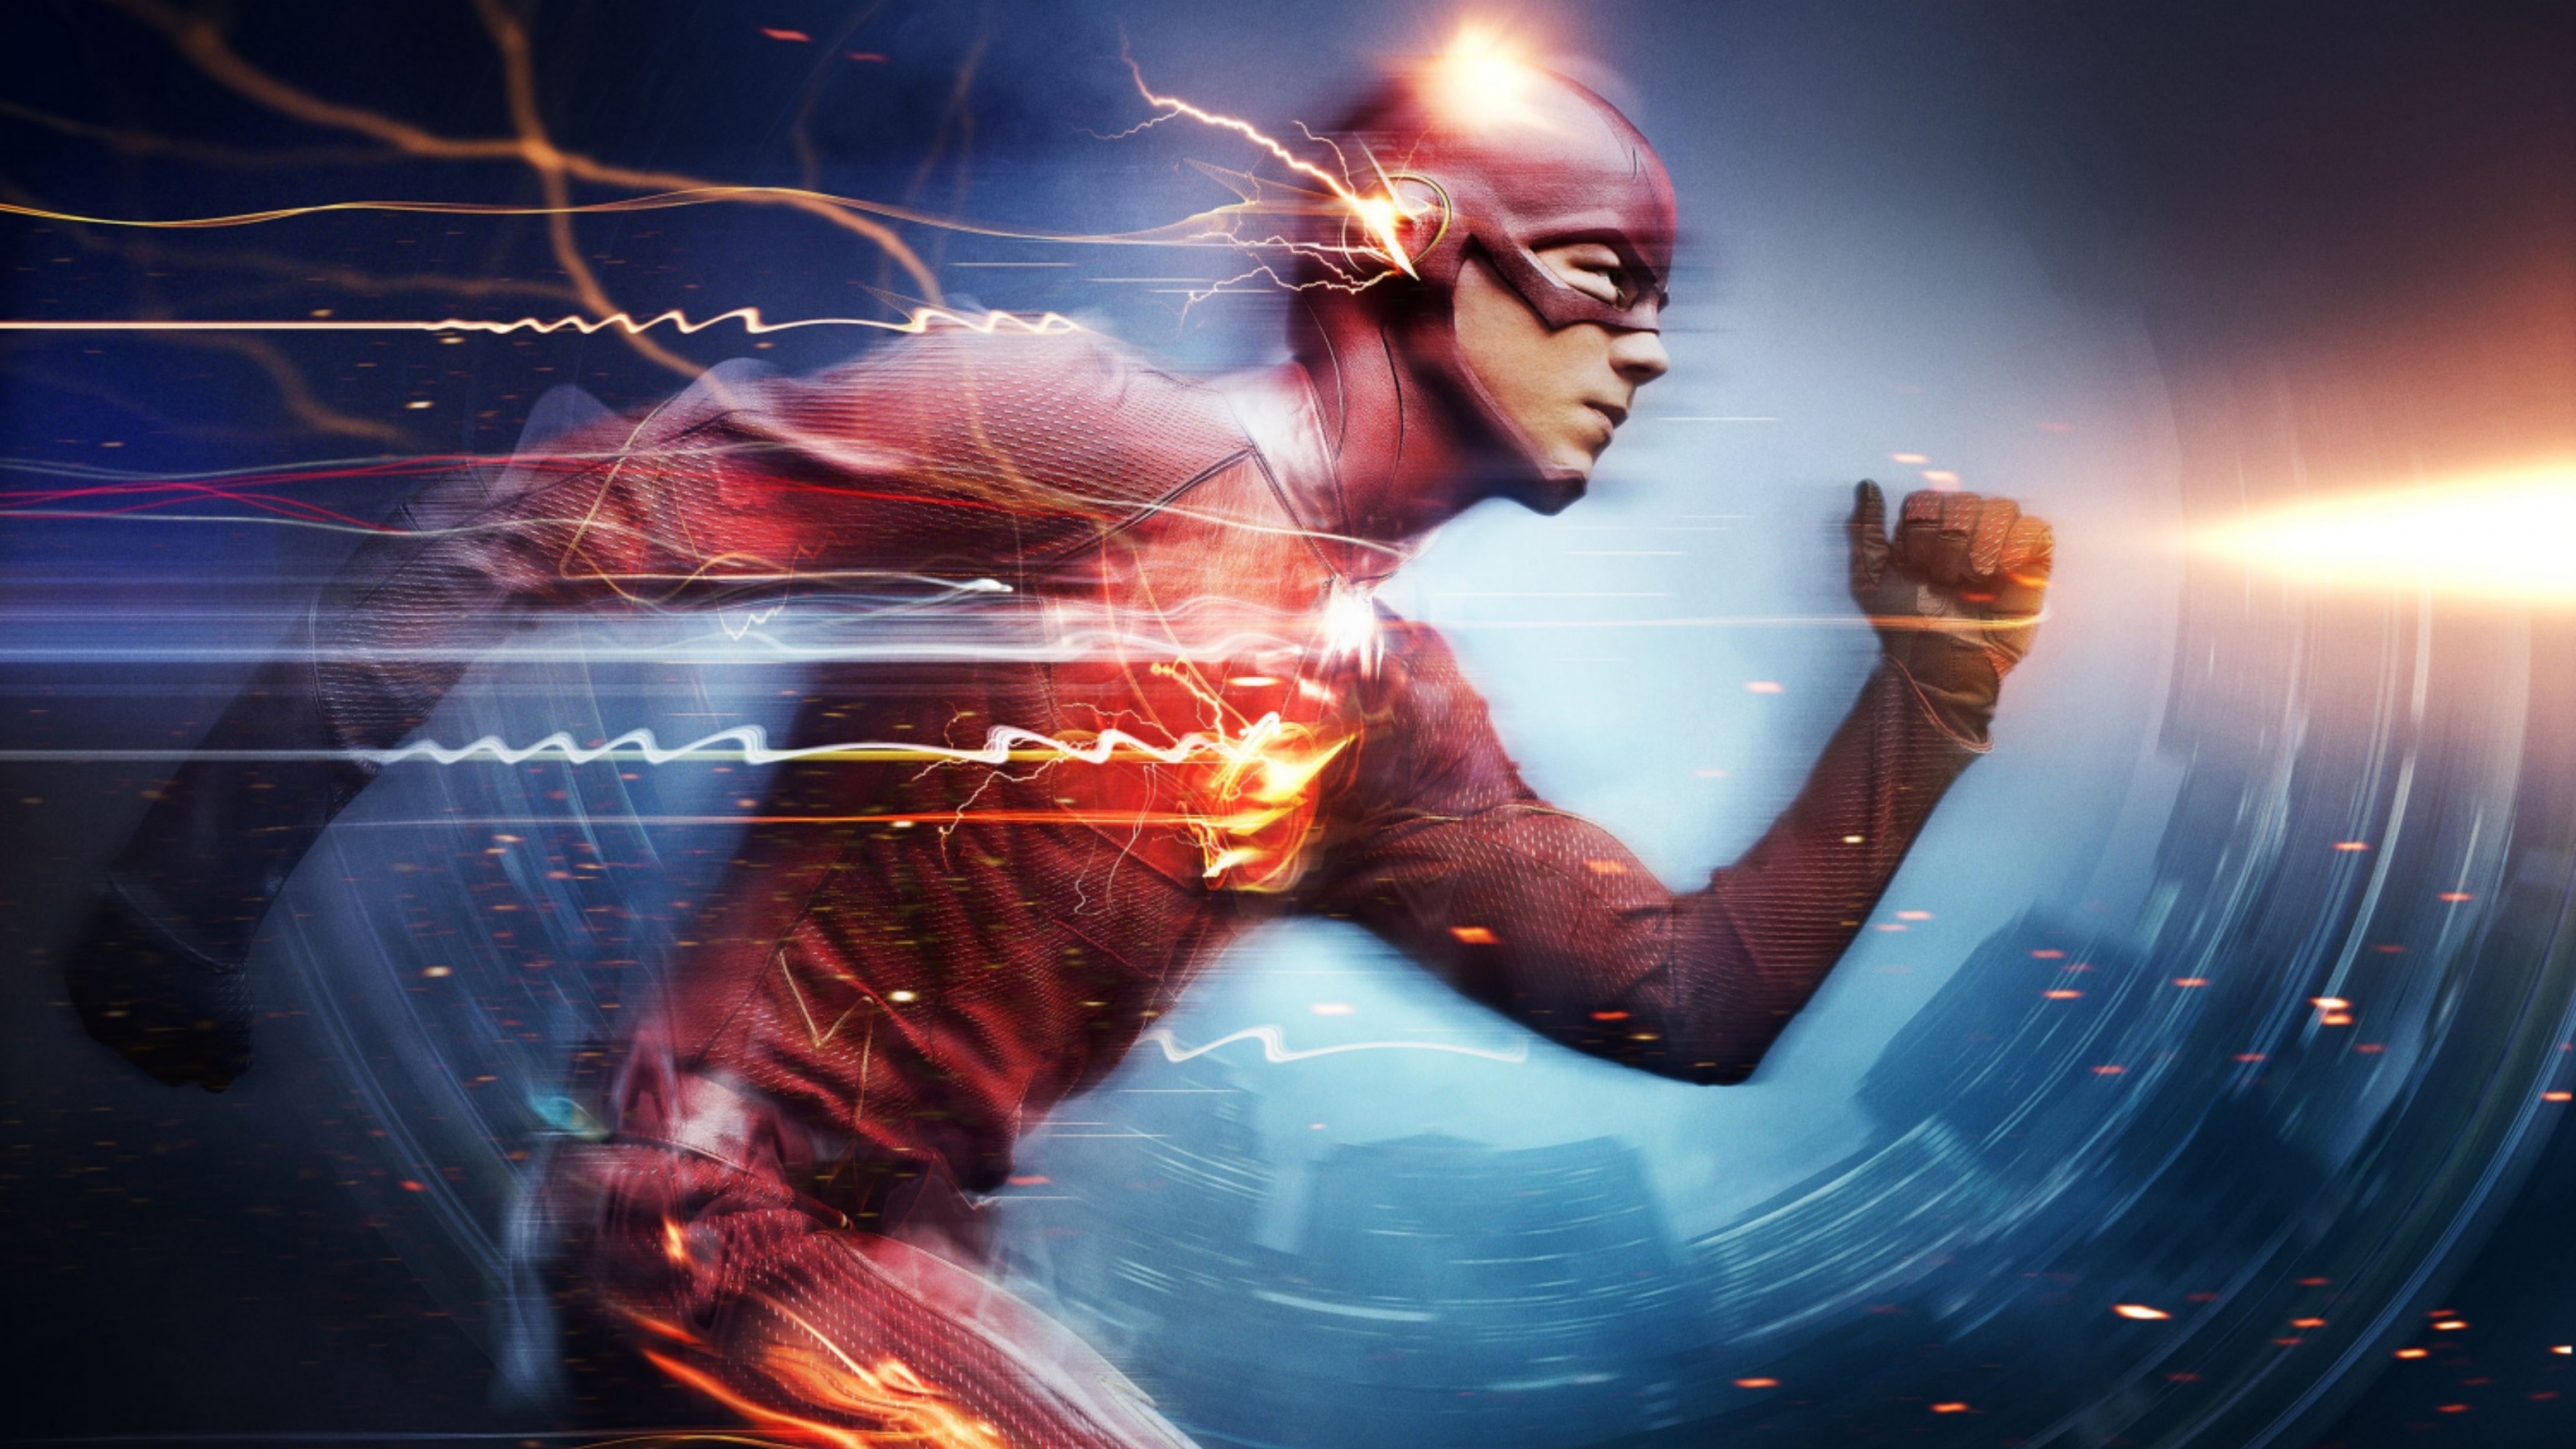 The Flash 4k Wallpaper Image